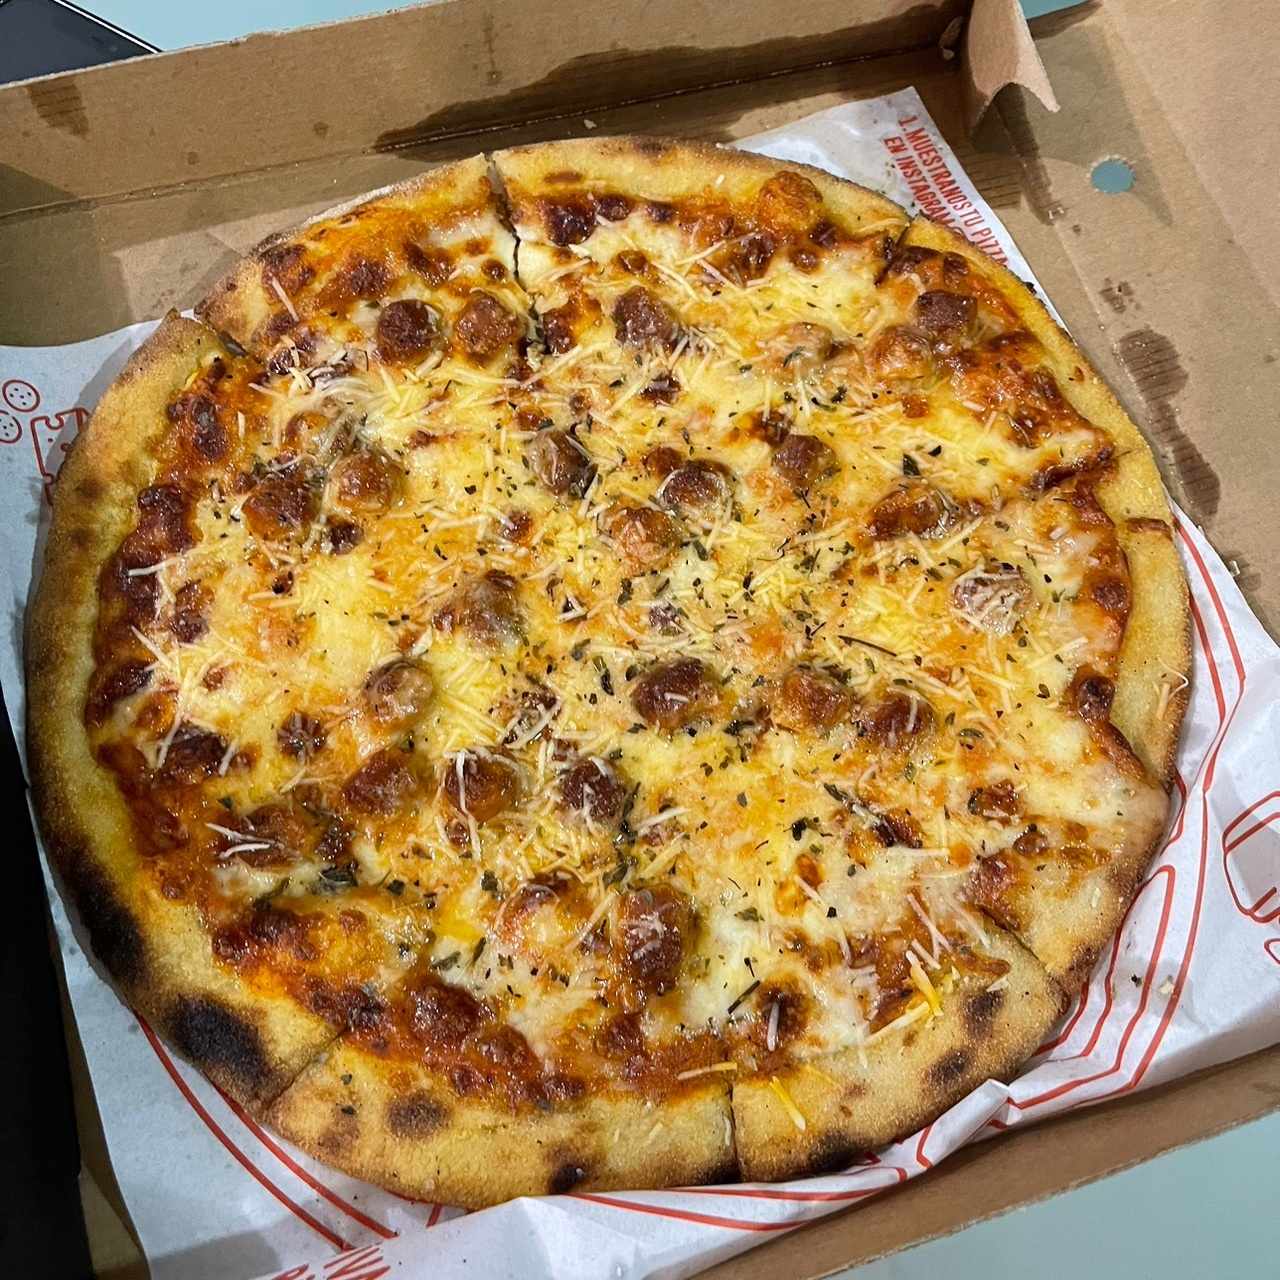 Pizzas - Chistorra 4 Quesos